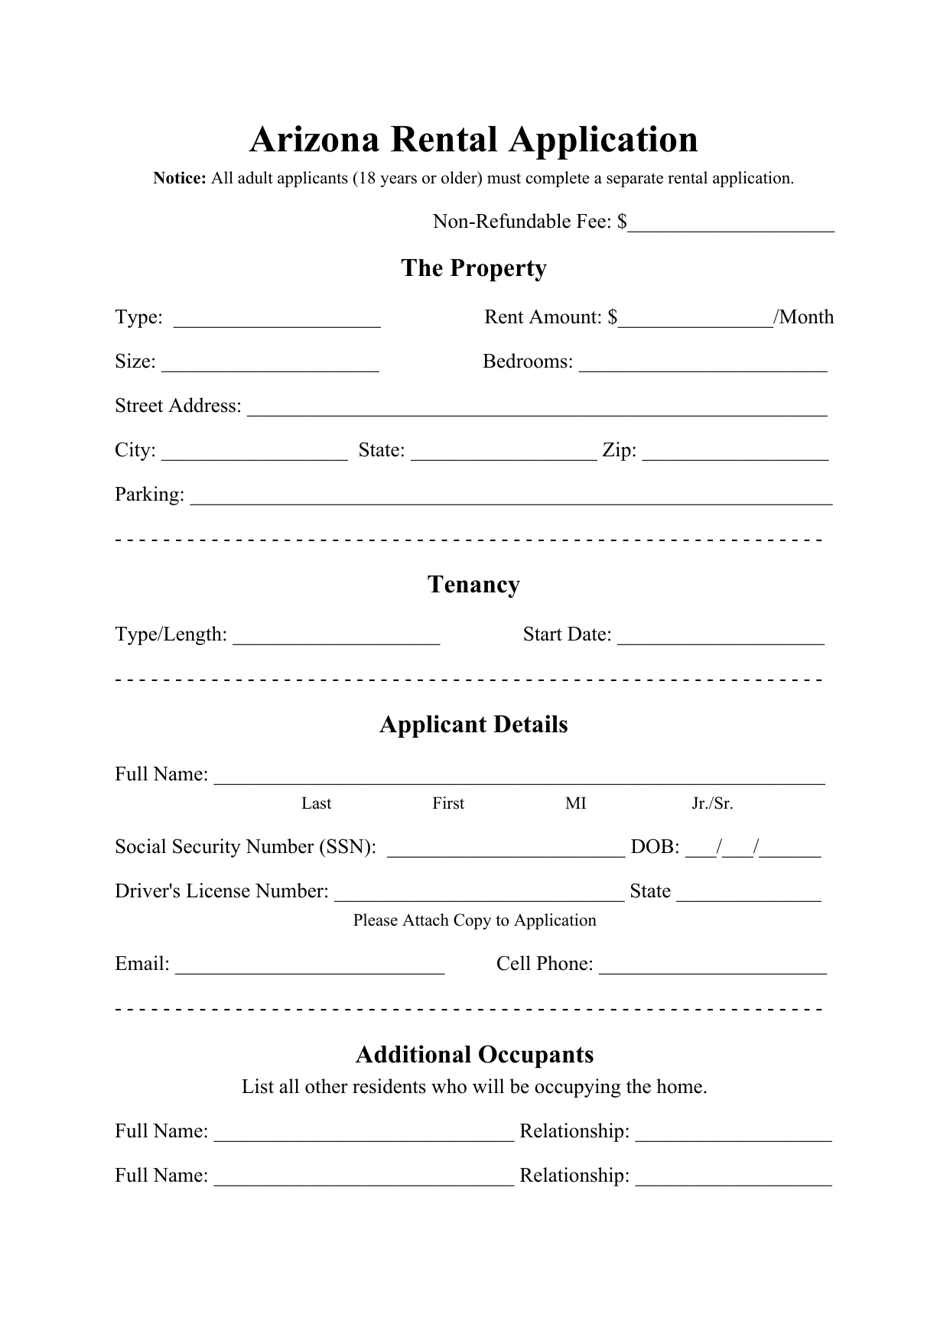 arizona rental application form download printable pdf templateroller